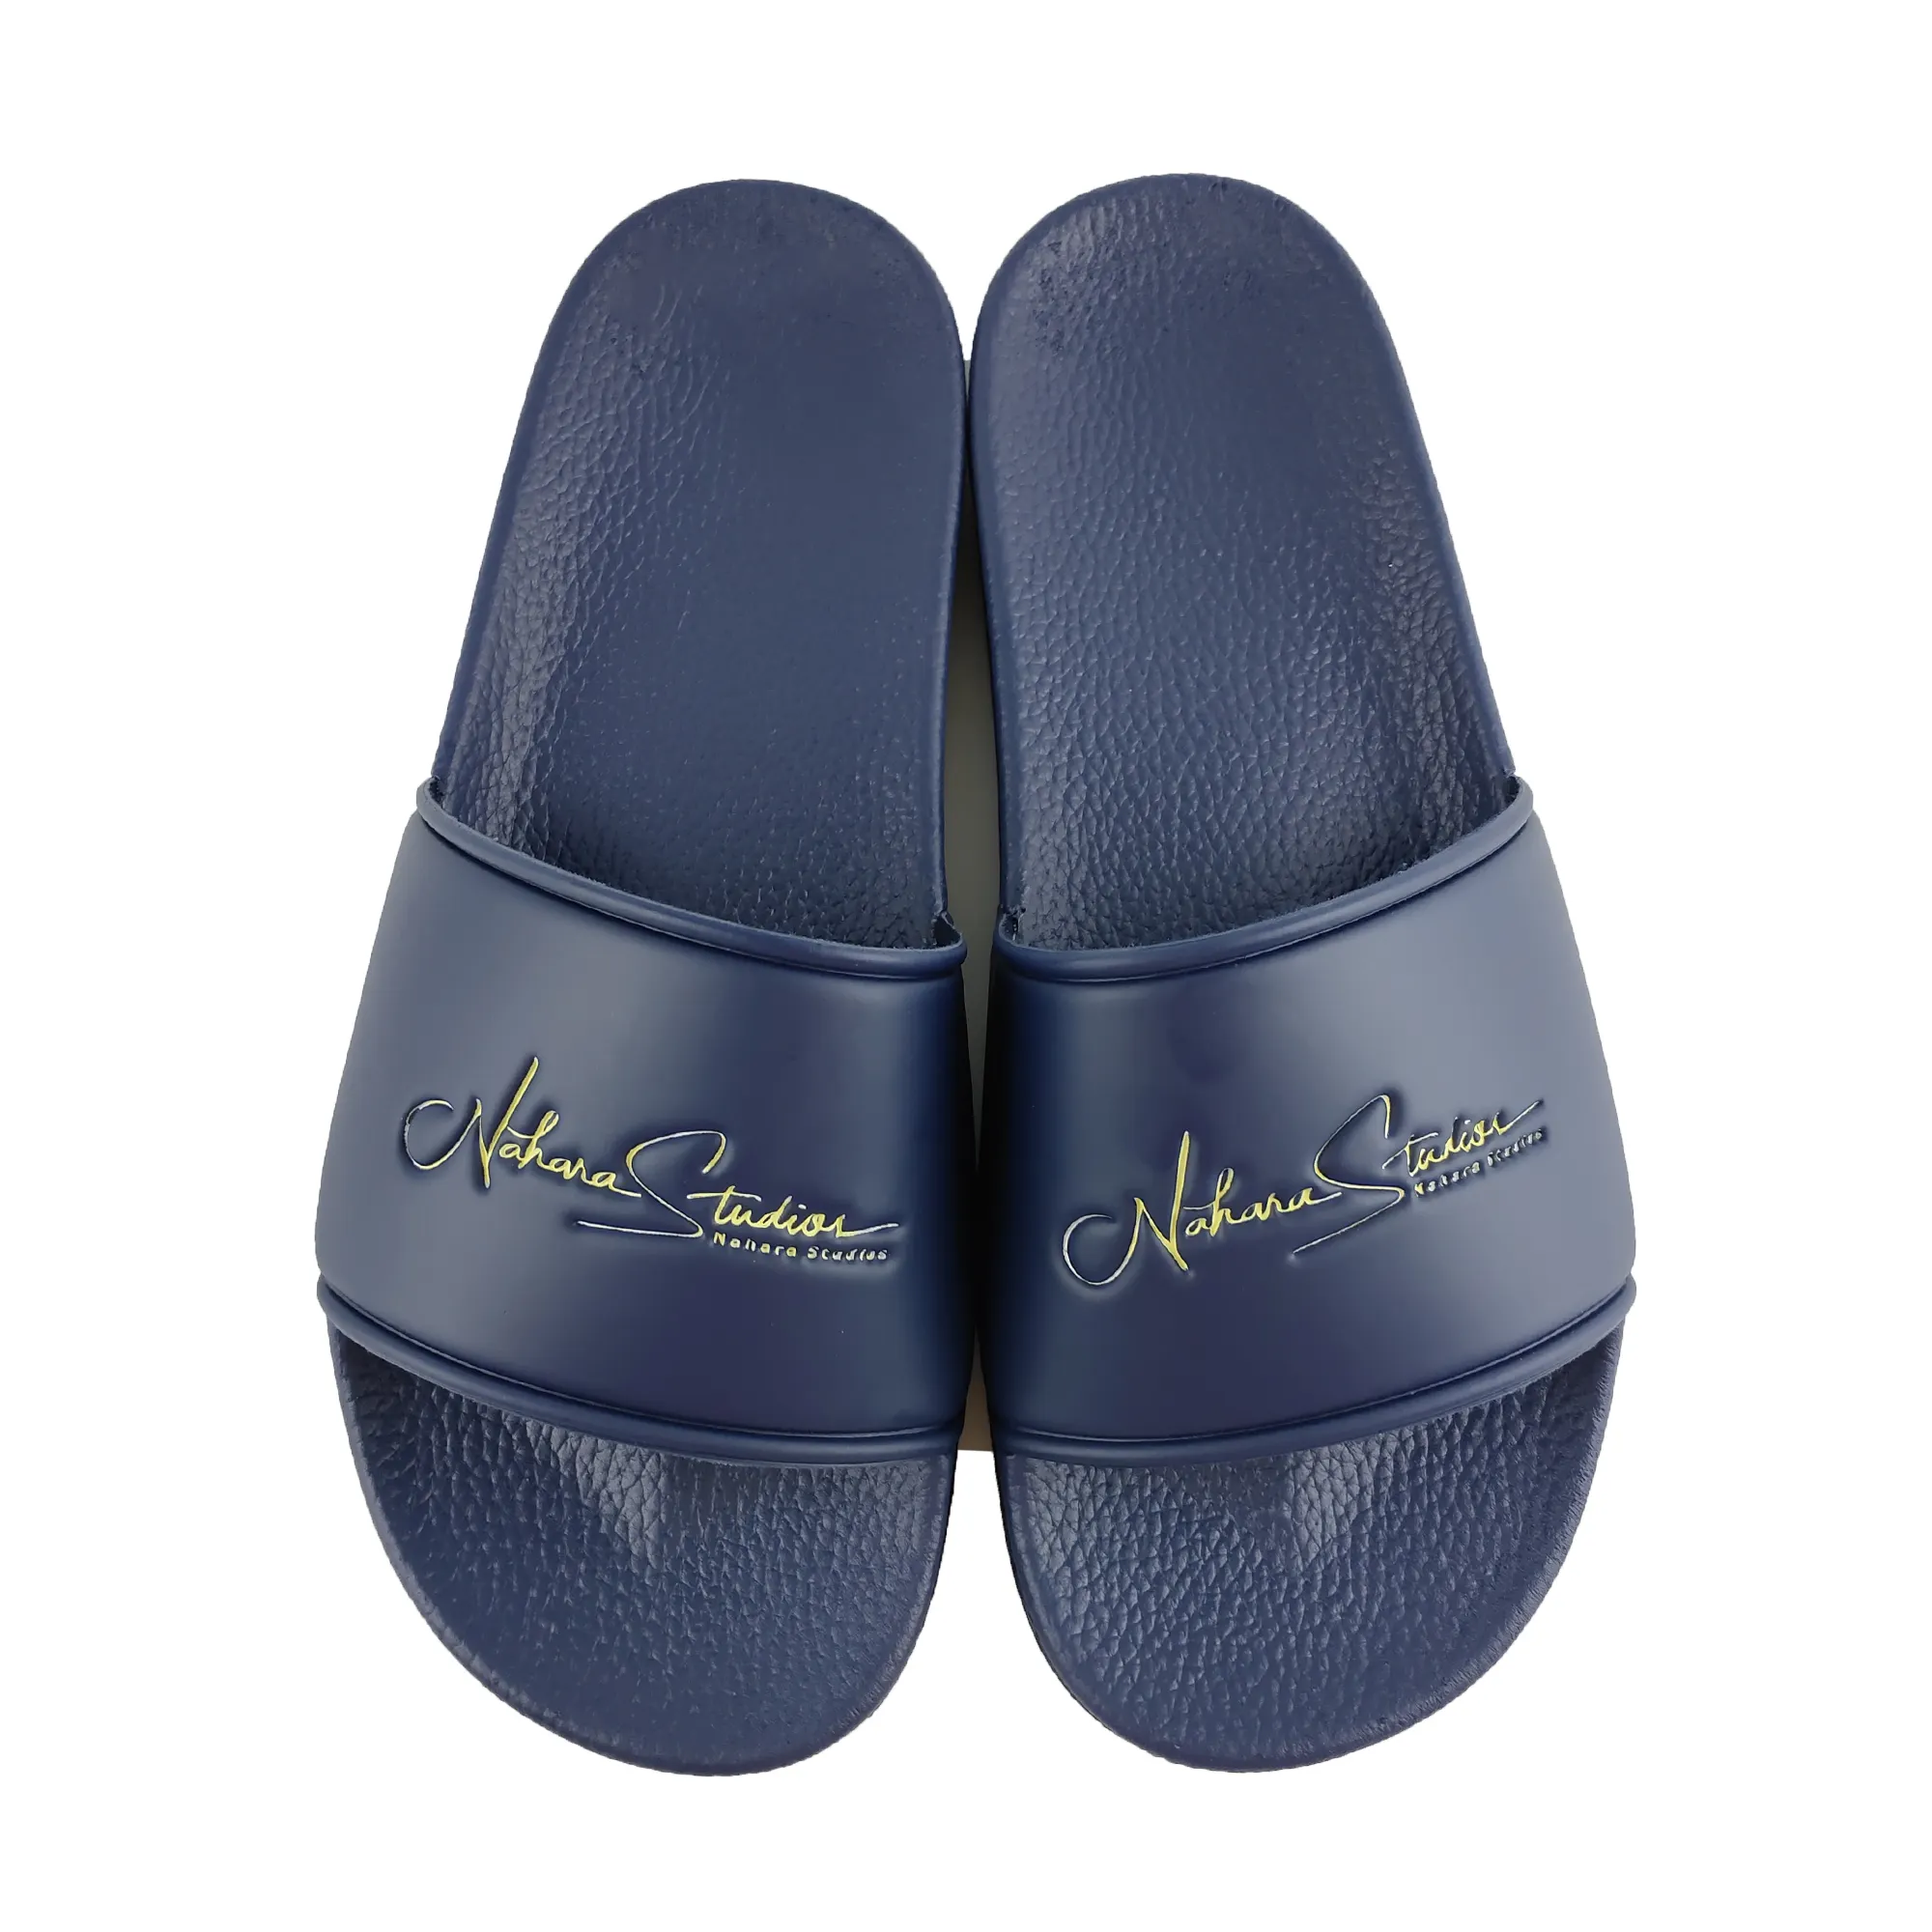 Greatshoe latest design pu high quality lightweight indoor slippers men bedroom slipper slider shoes